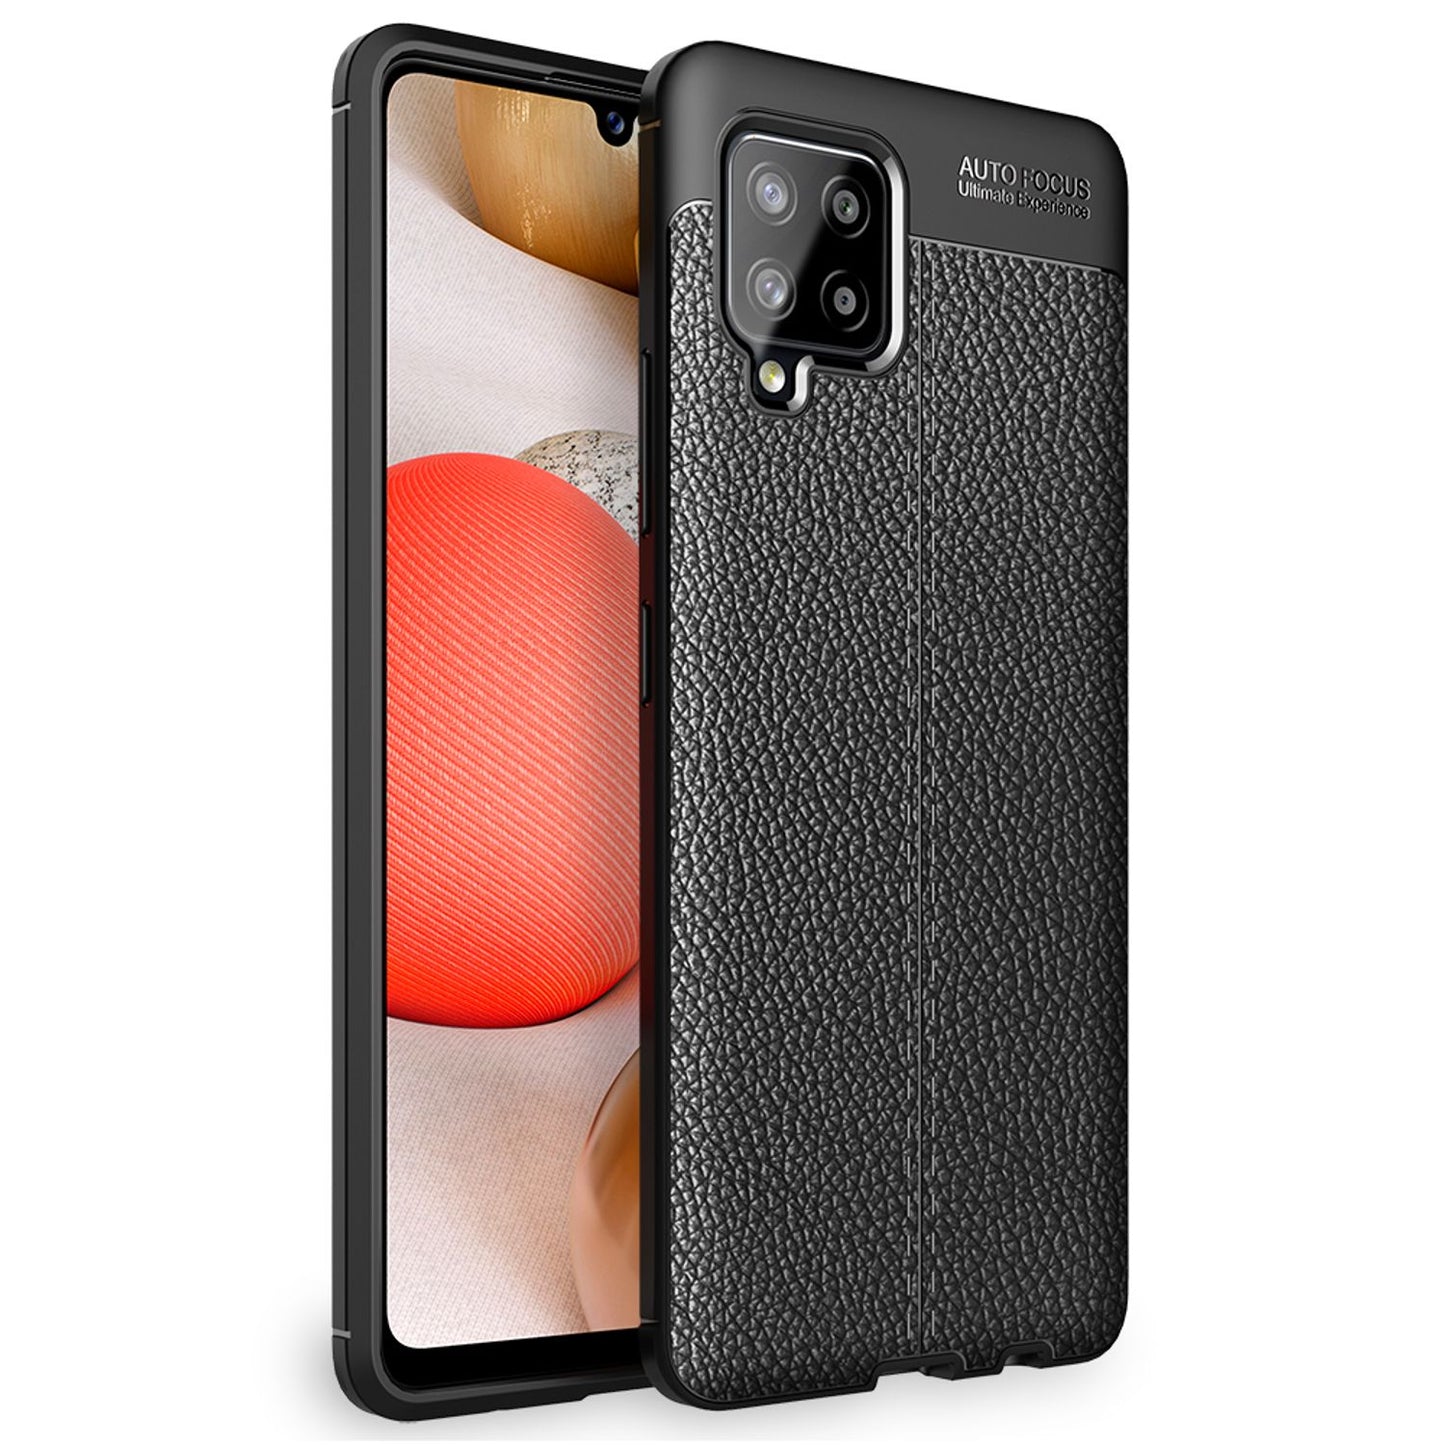 NALIA Leder Case für Samsung Galaxy A42 5G, Silikon Handy Hülle Schutz Cover TPU